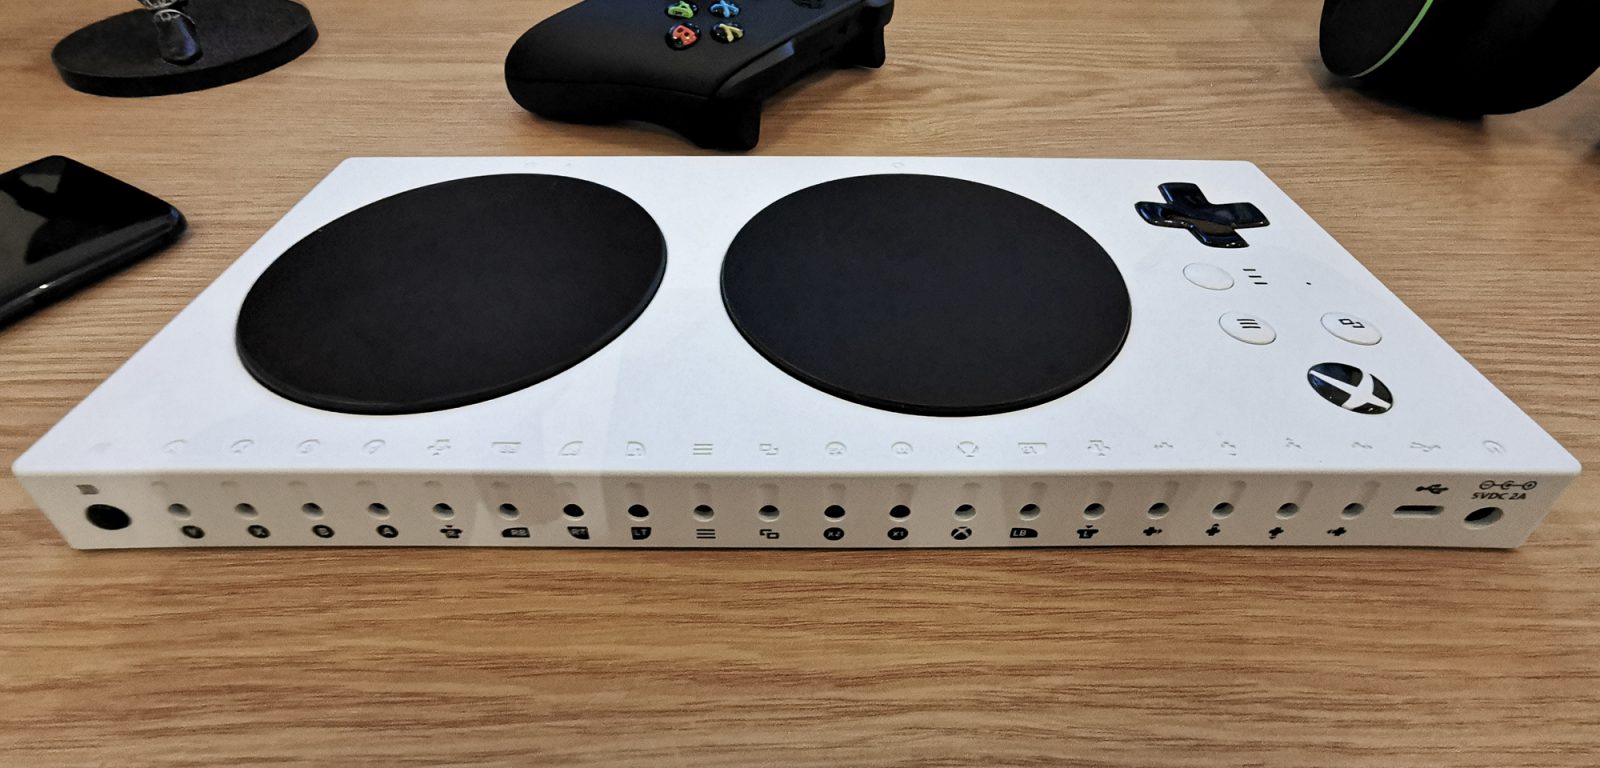 Xbox Adaptive Controller